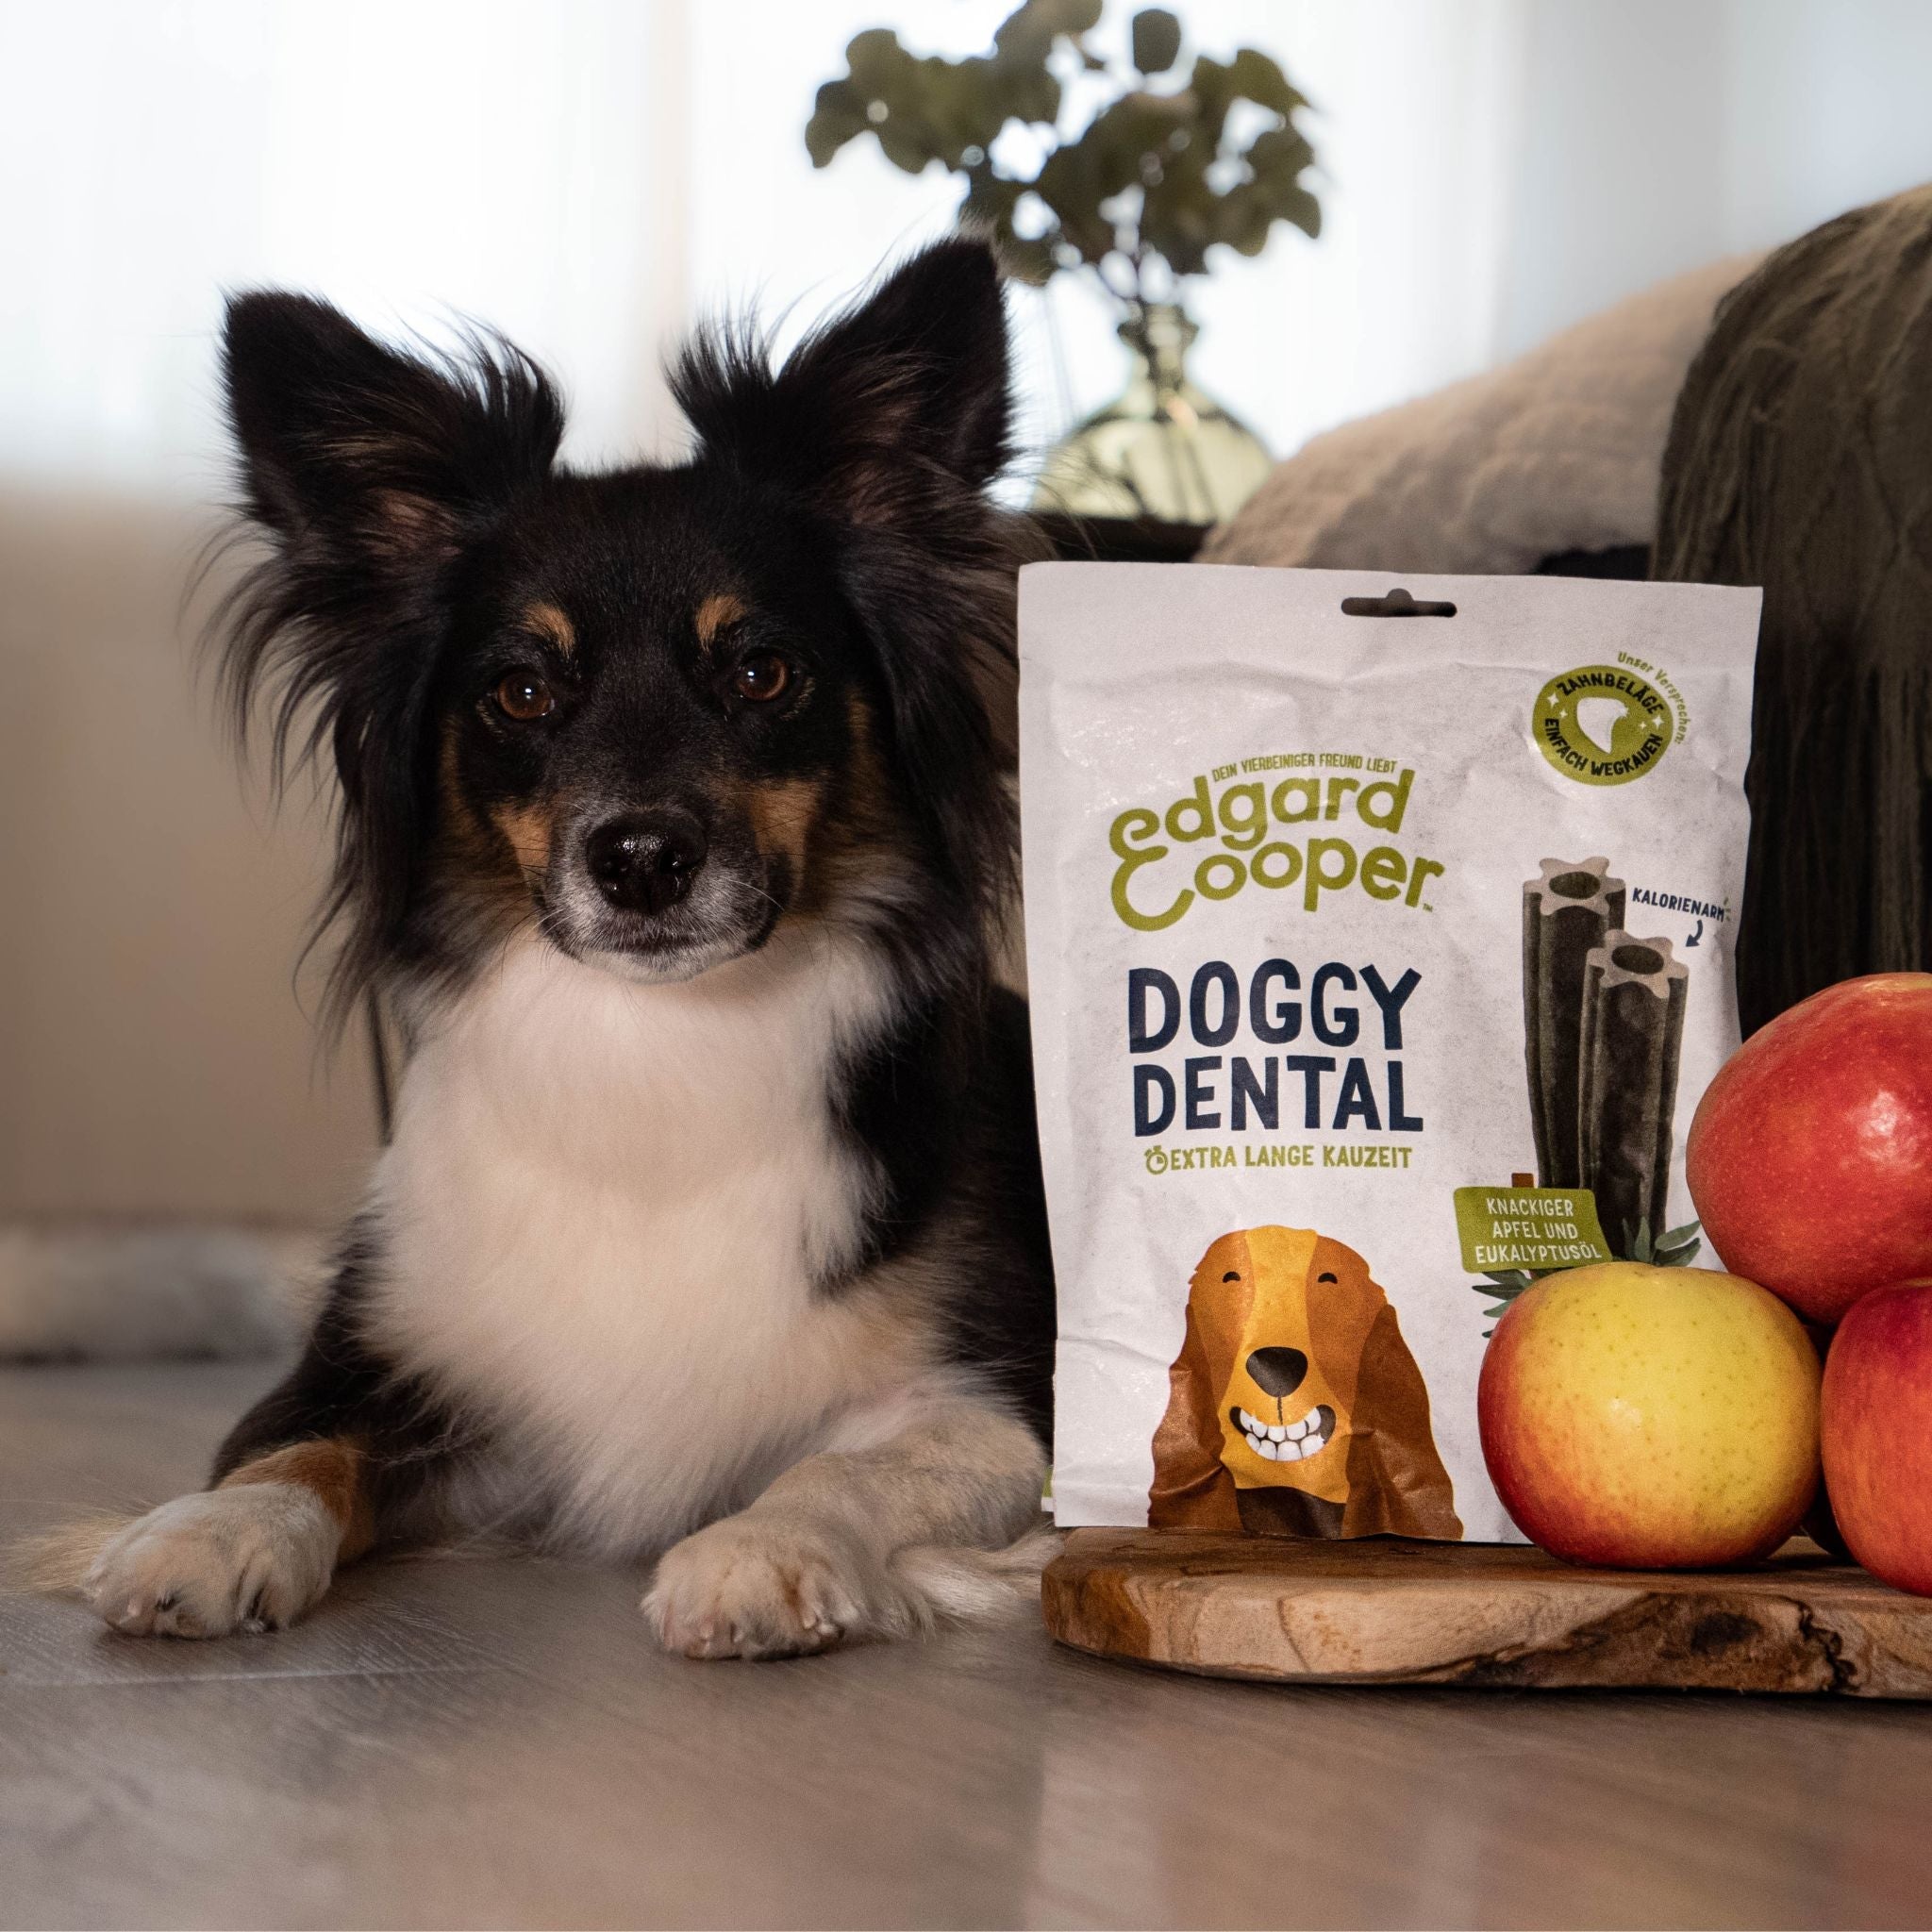 Edgard & Cooper Doggy Dentals Small - Kausticks mit Apfel & Eukalyptus (105g)